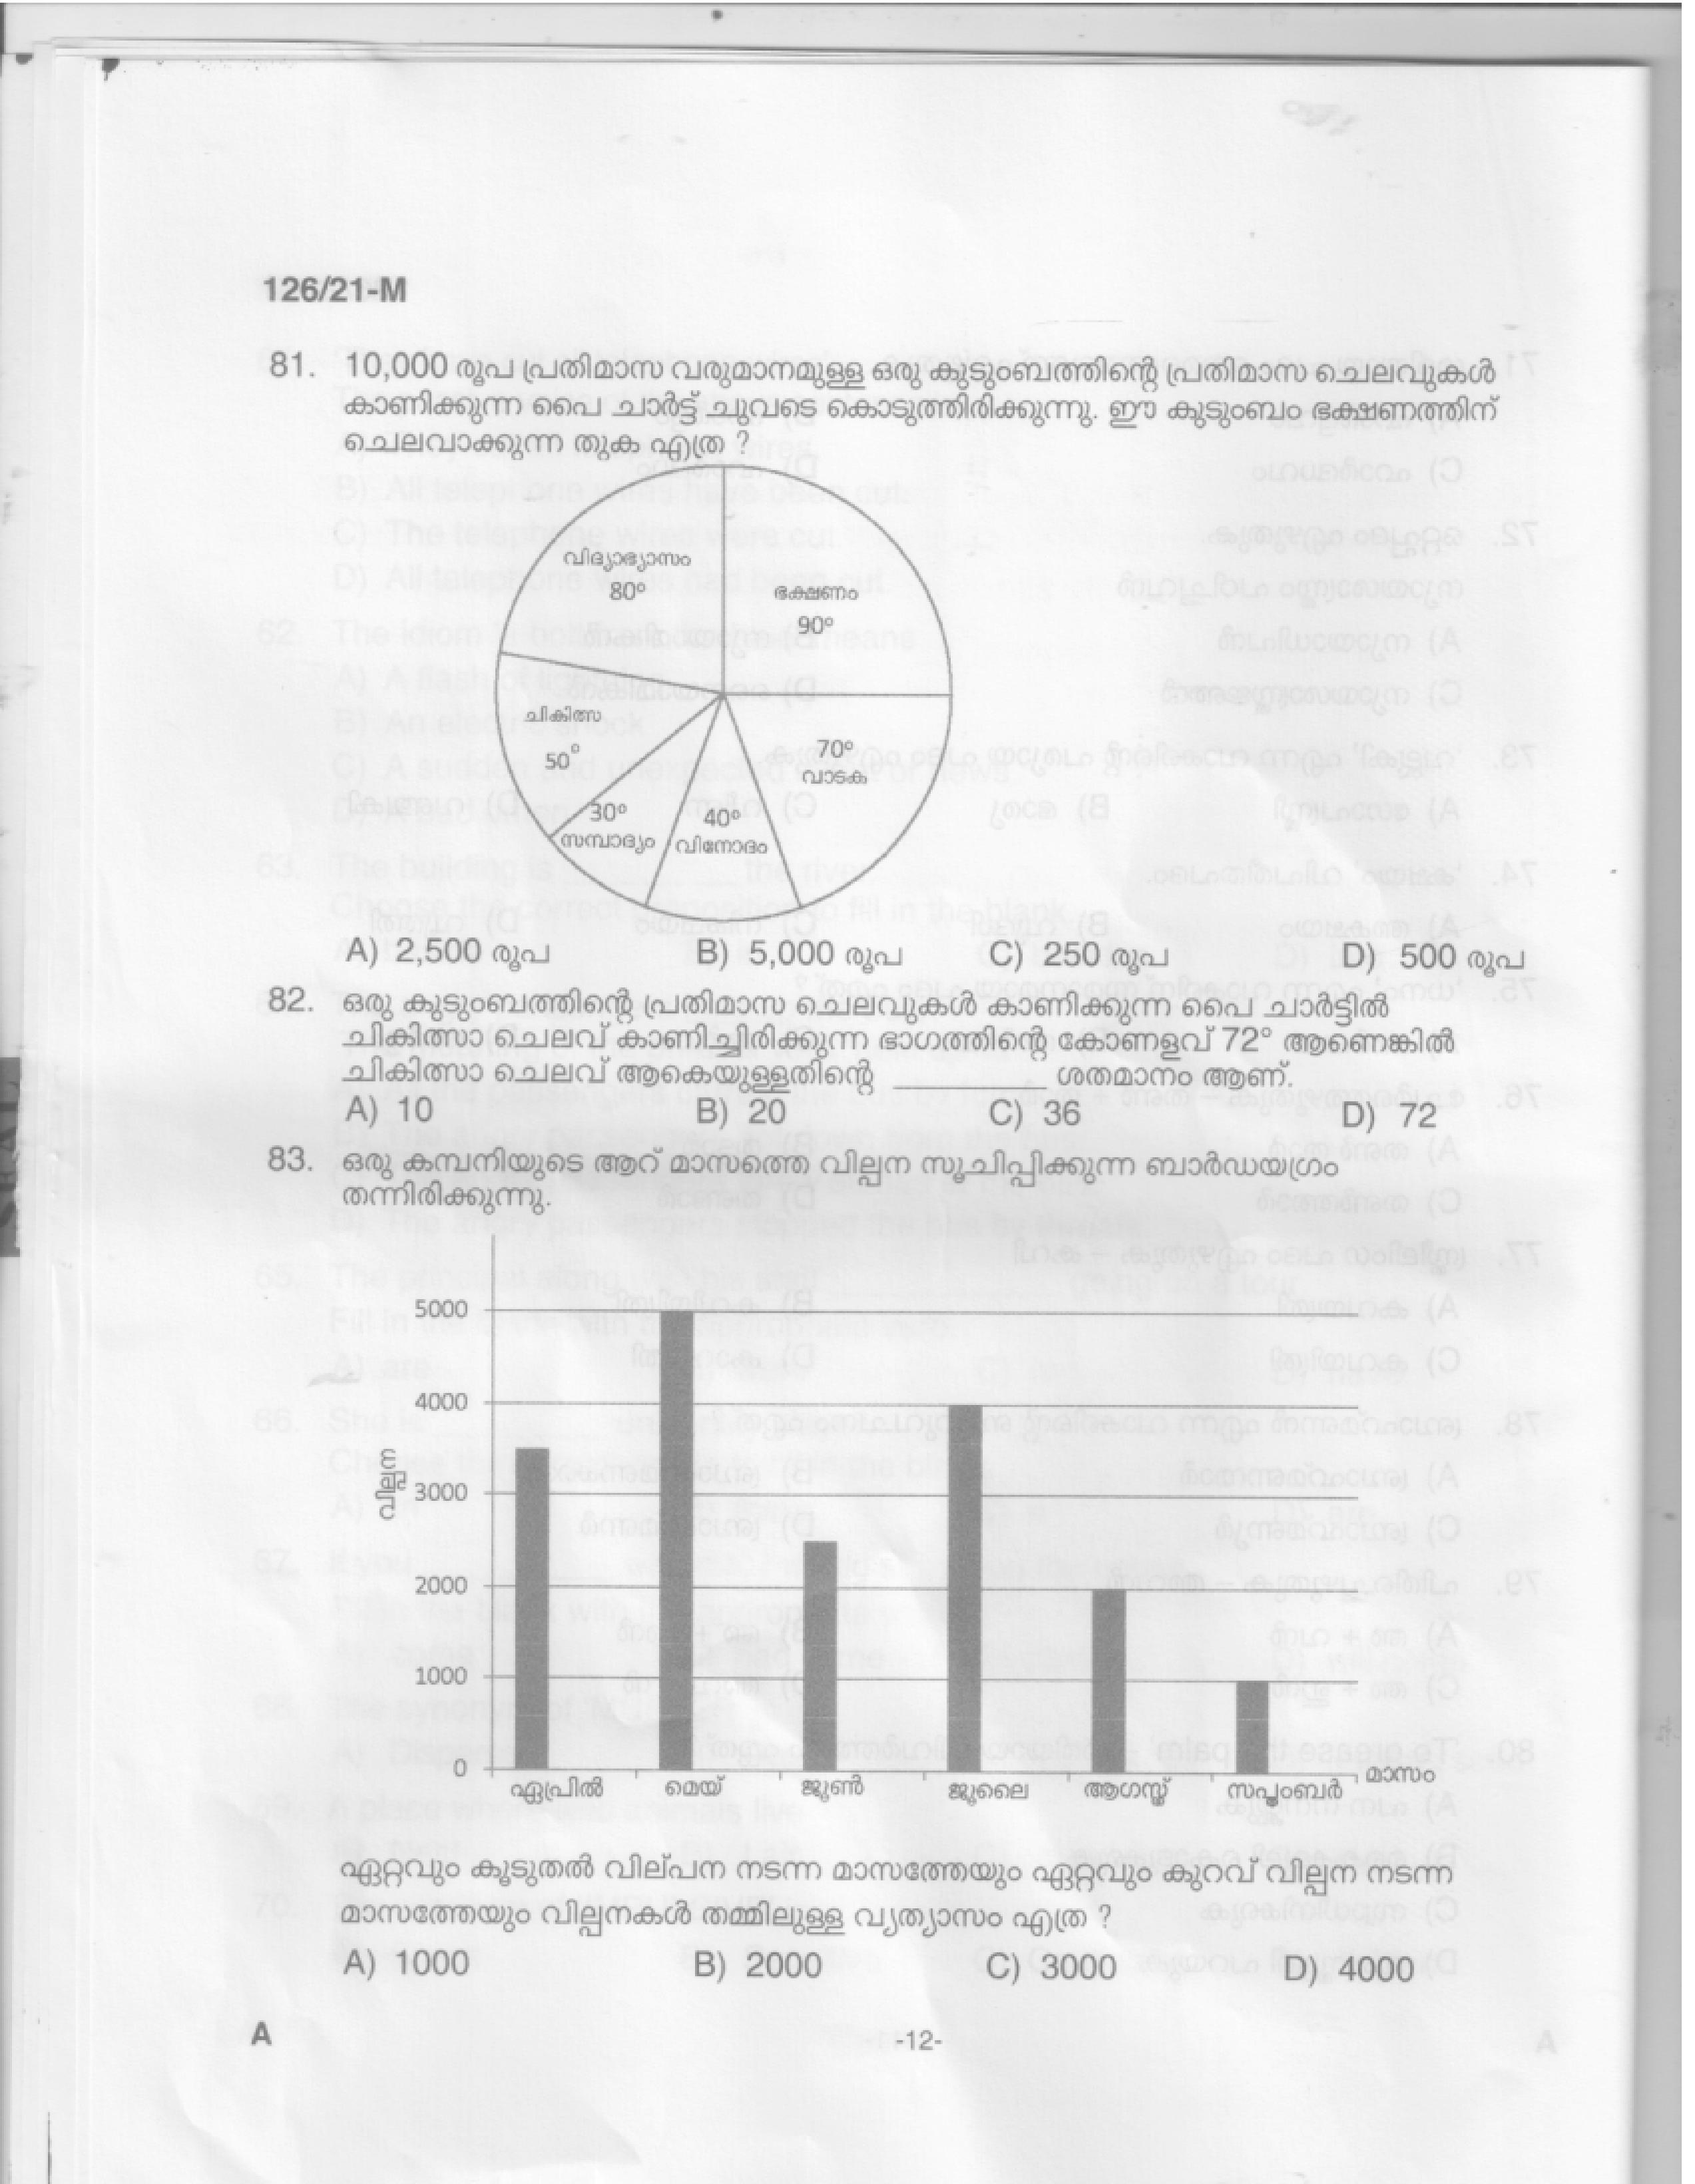 Upto SSLC Level Main Exam Assistant Compiler Malayalam Exam 2021 Code 1262021 M 10